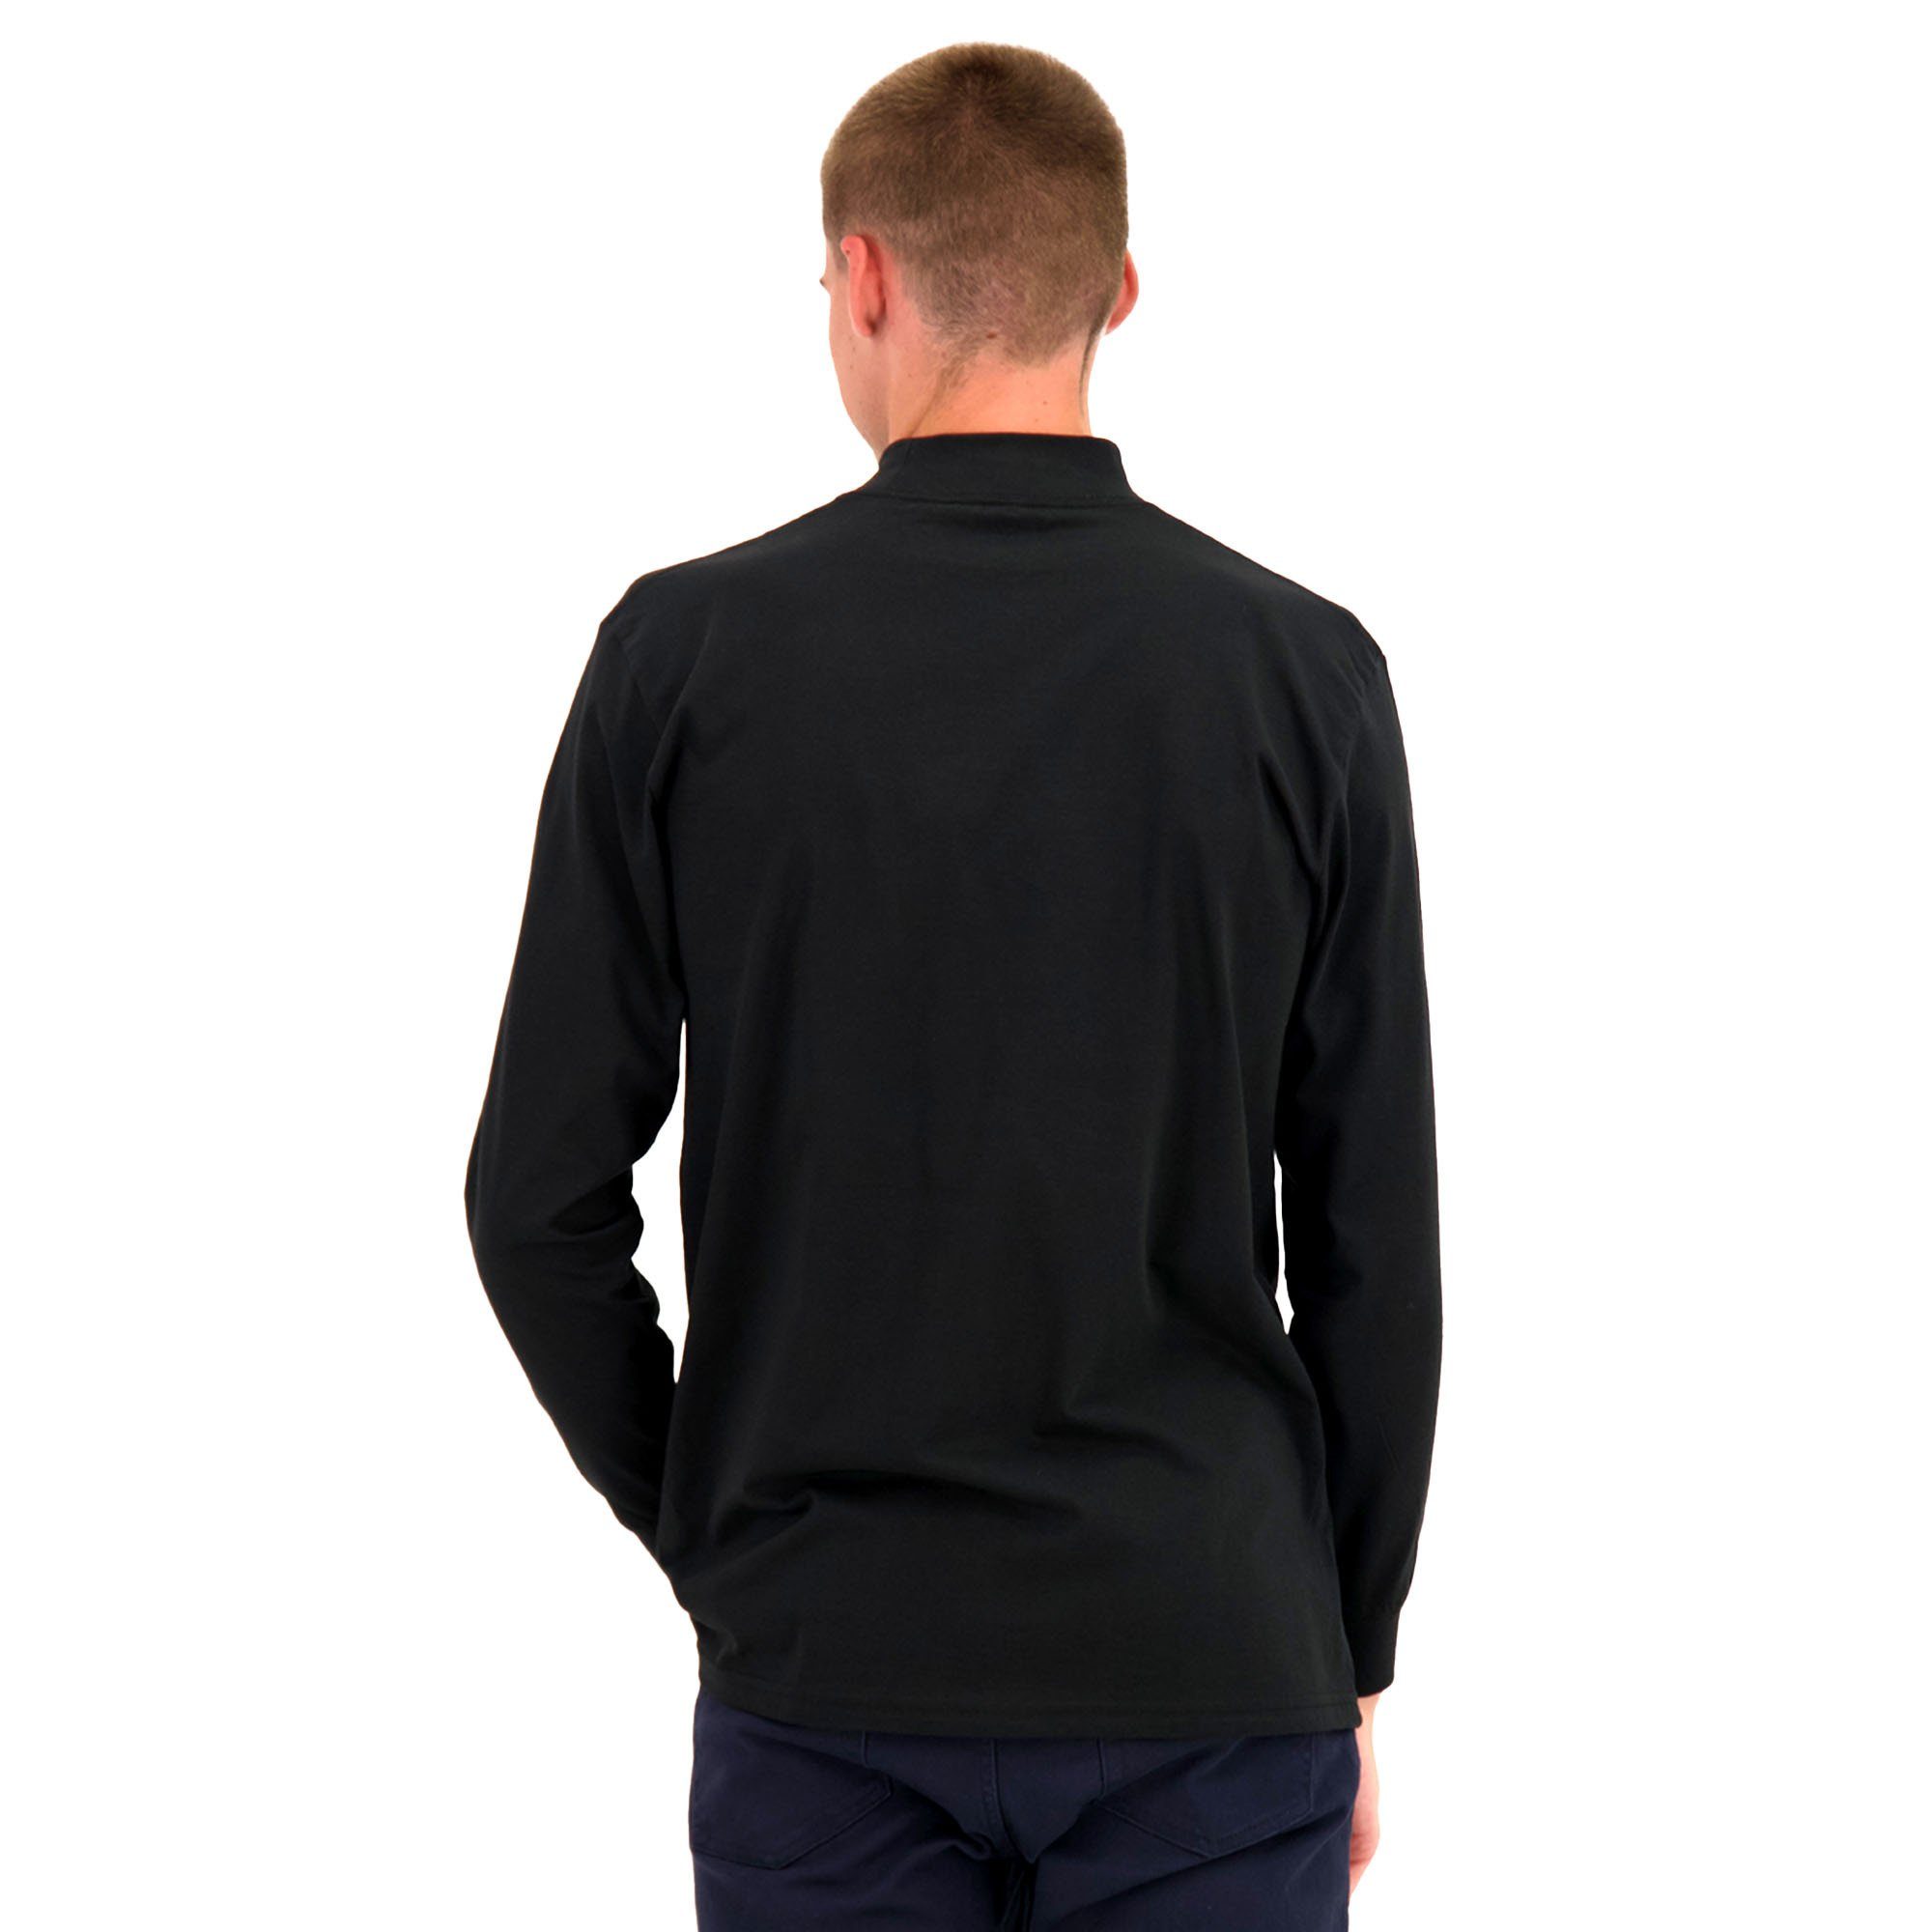 Schwarz Basic Sweatshirt - Stehkragen-Pullover Herren RAGMAN Langarm